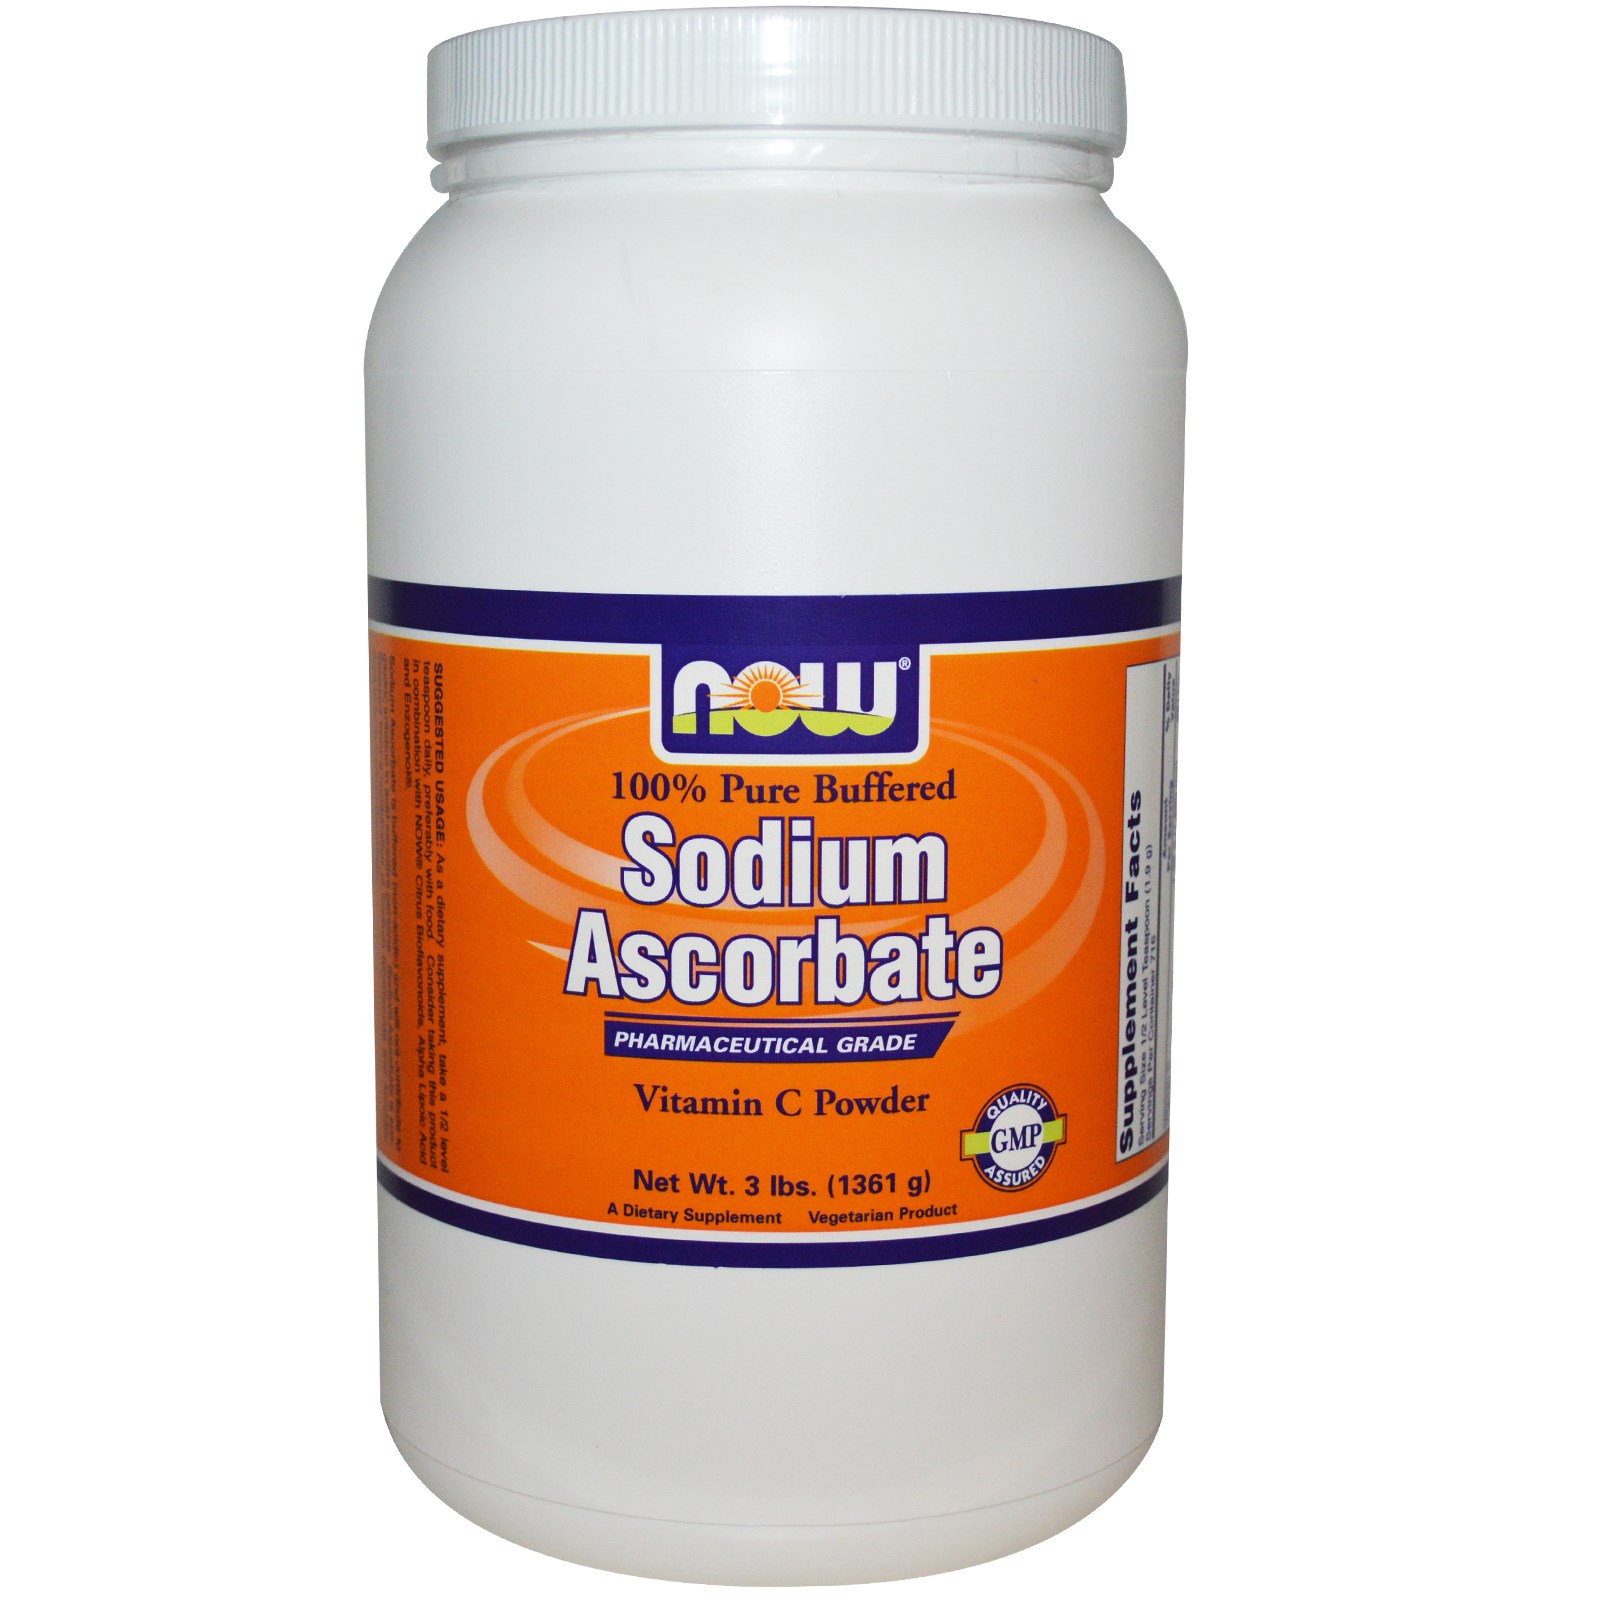 Sodium Ascorbate Powder - 3 lbs.